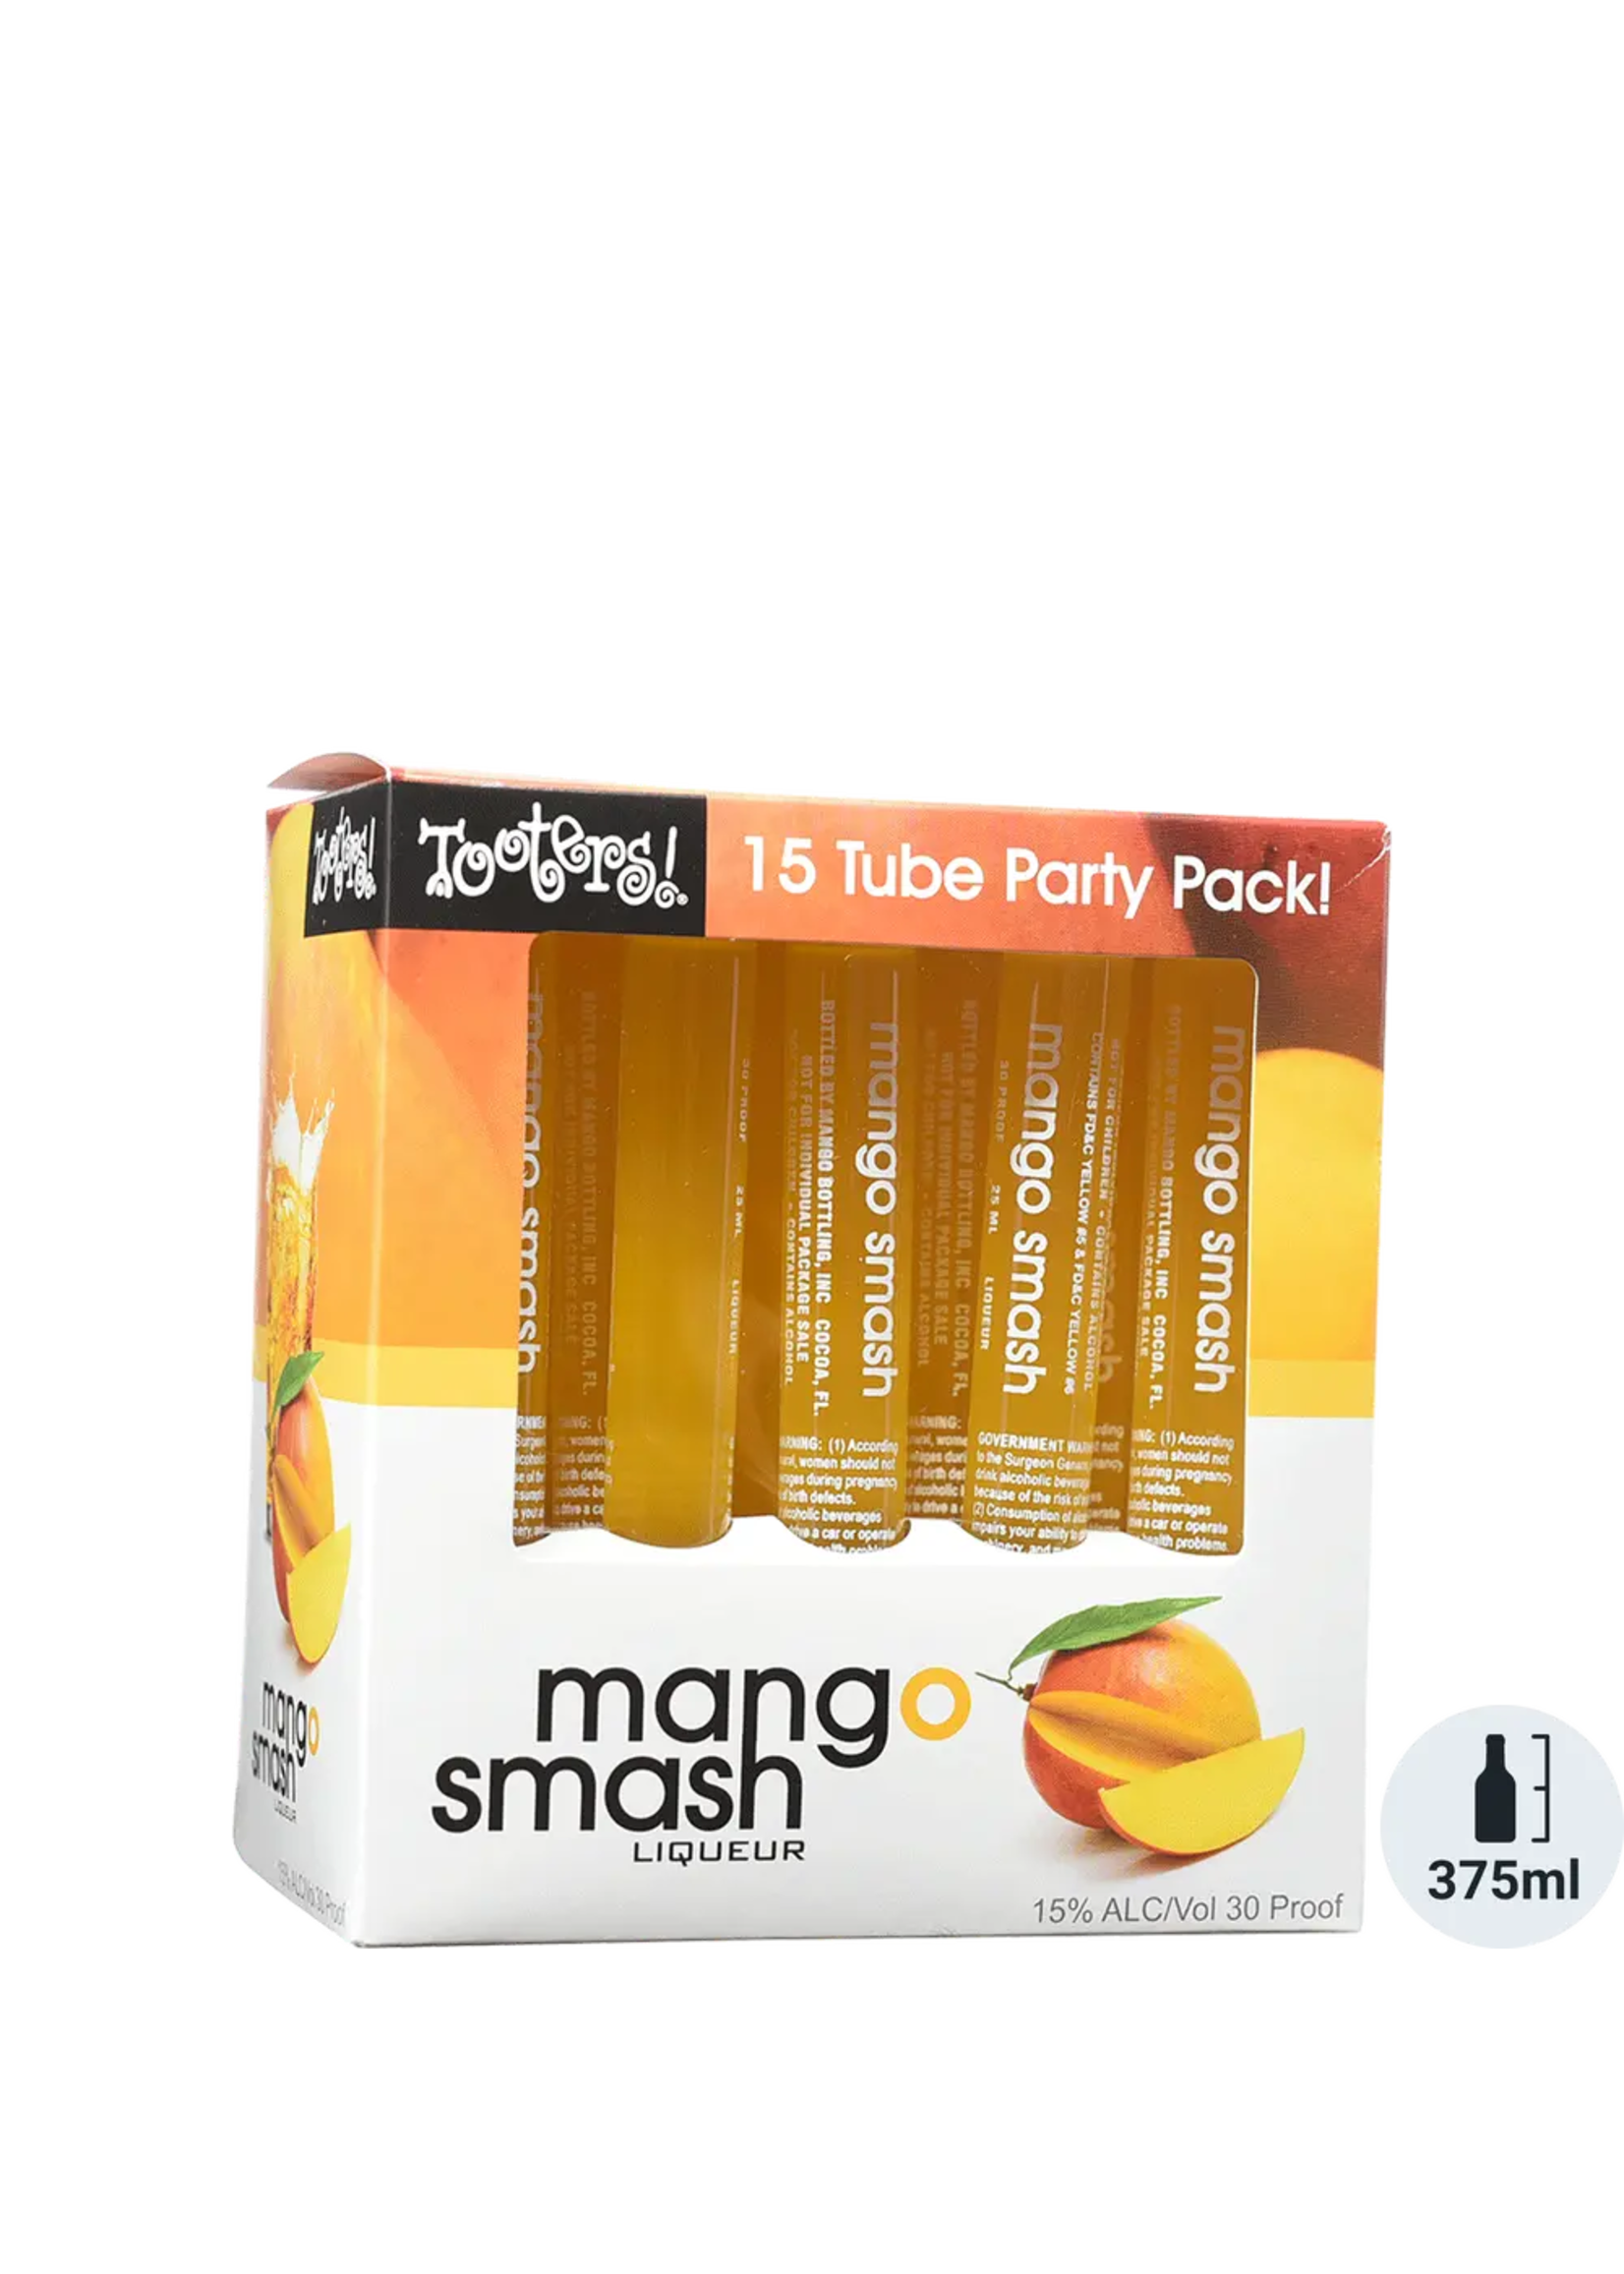 Tooters Mango Smash 30Proof 375ml